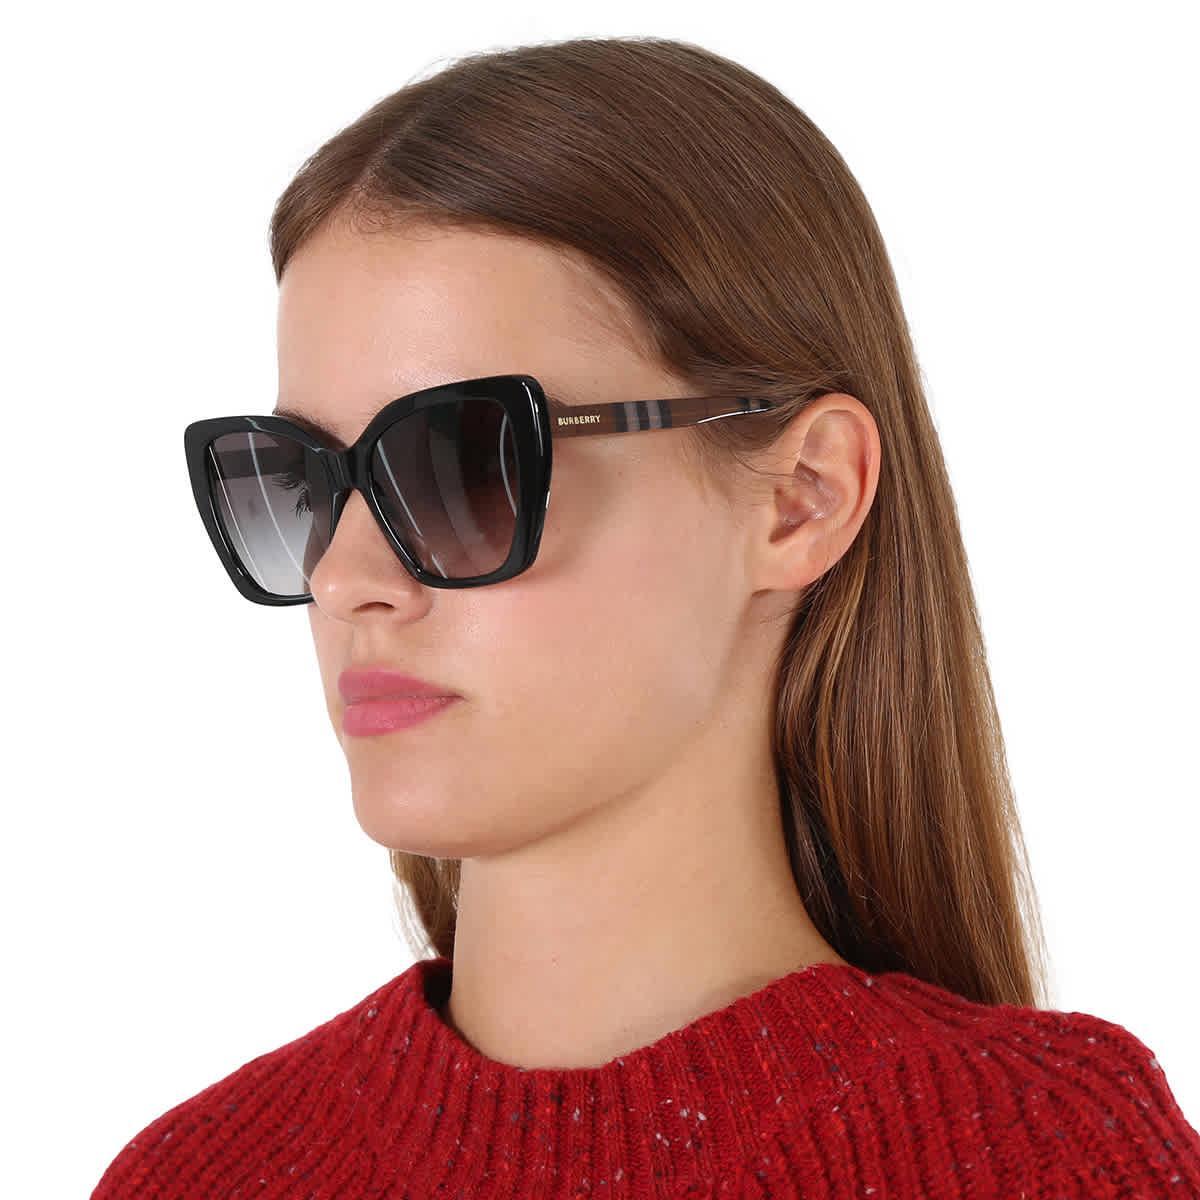 Isabel Marant 49mm Gradient Round Sunglasses Product Image